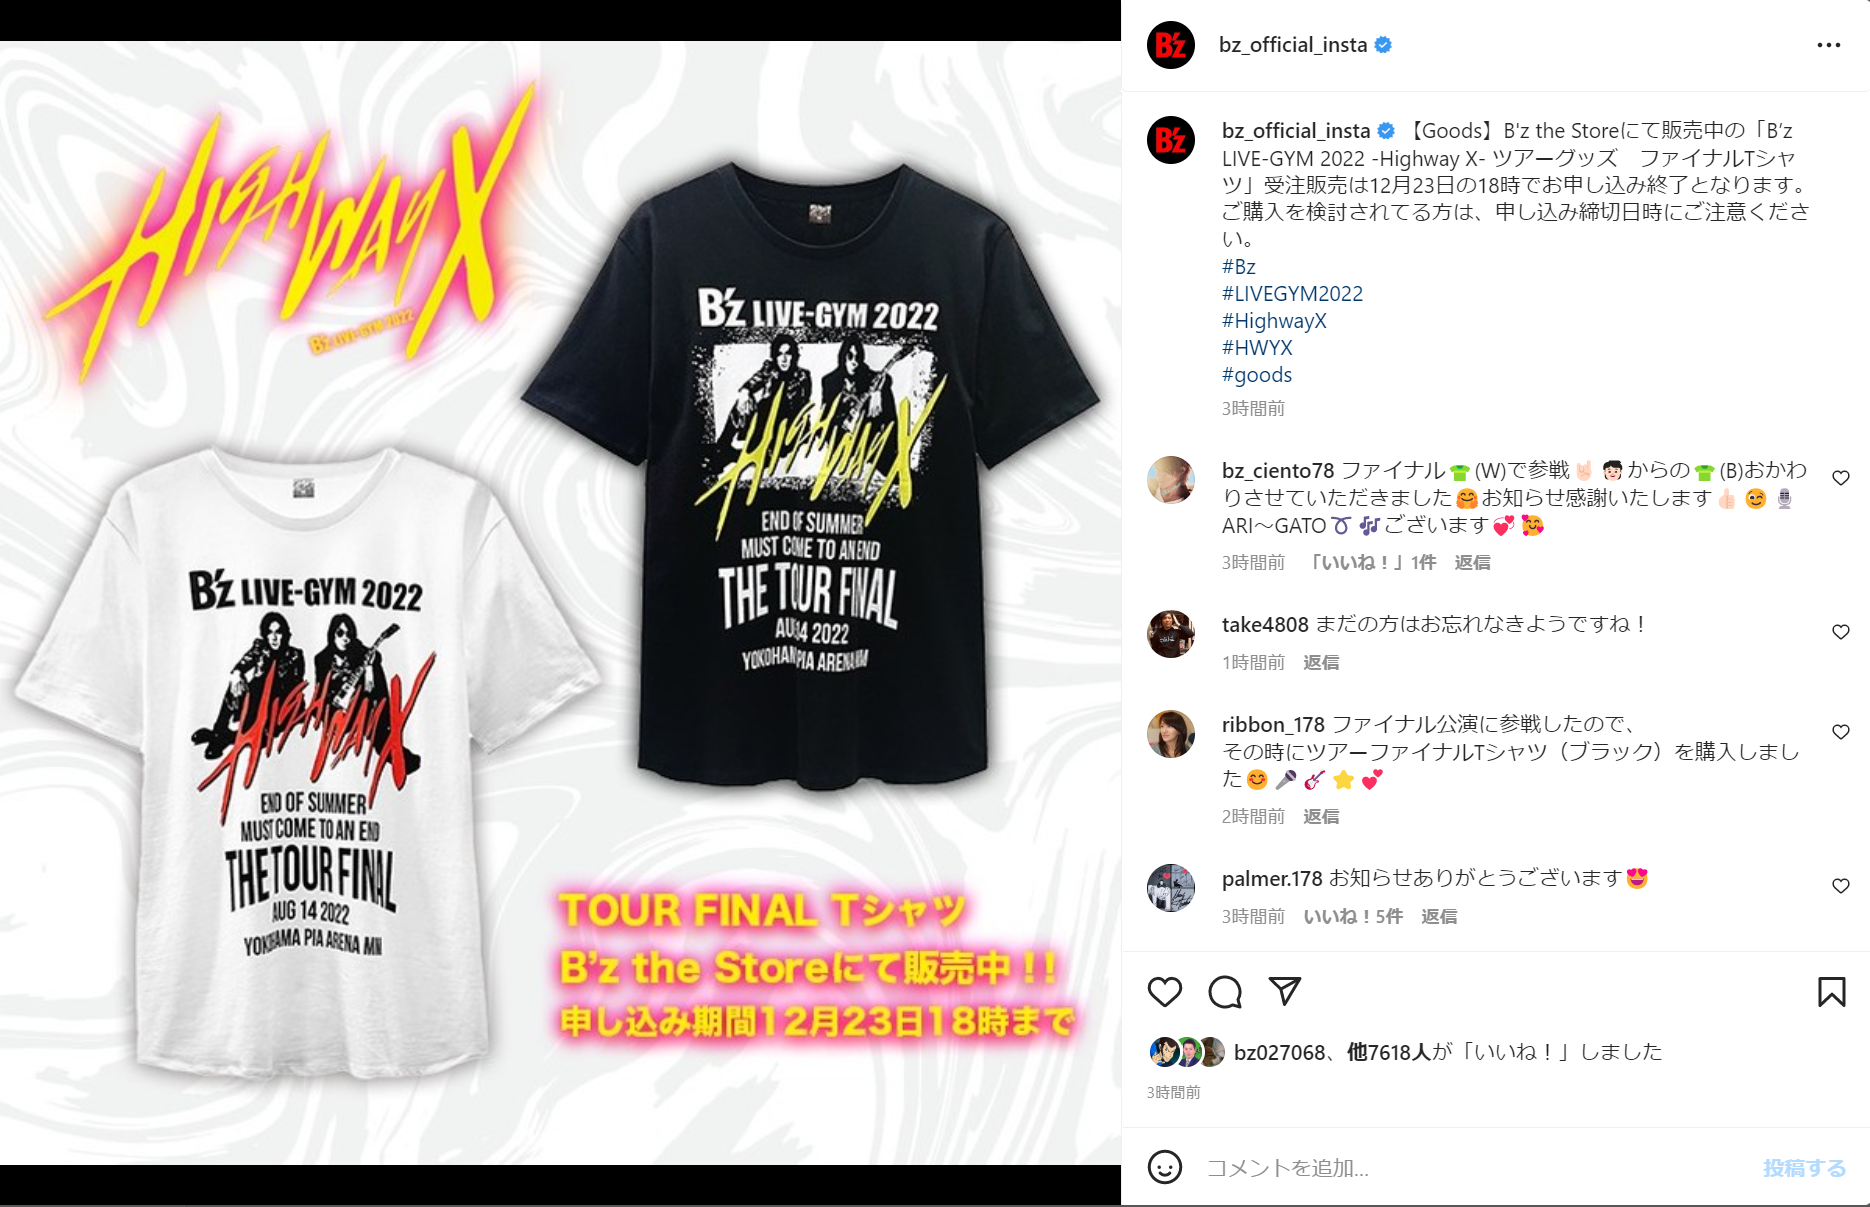 『B'z LIVE-GYM 2022 -Highway X-』千秋楽公演Tシャツの入金締切を共有する投稿のキャプチャ画像